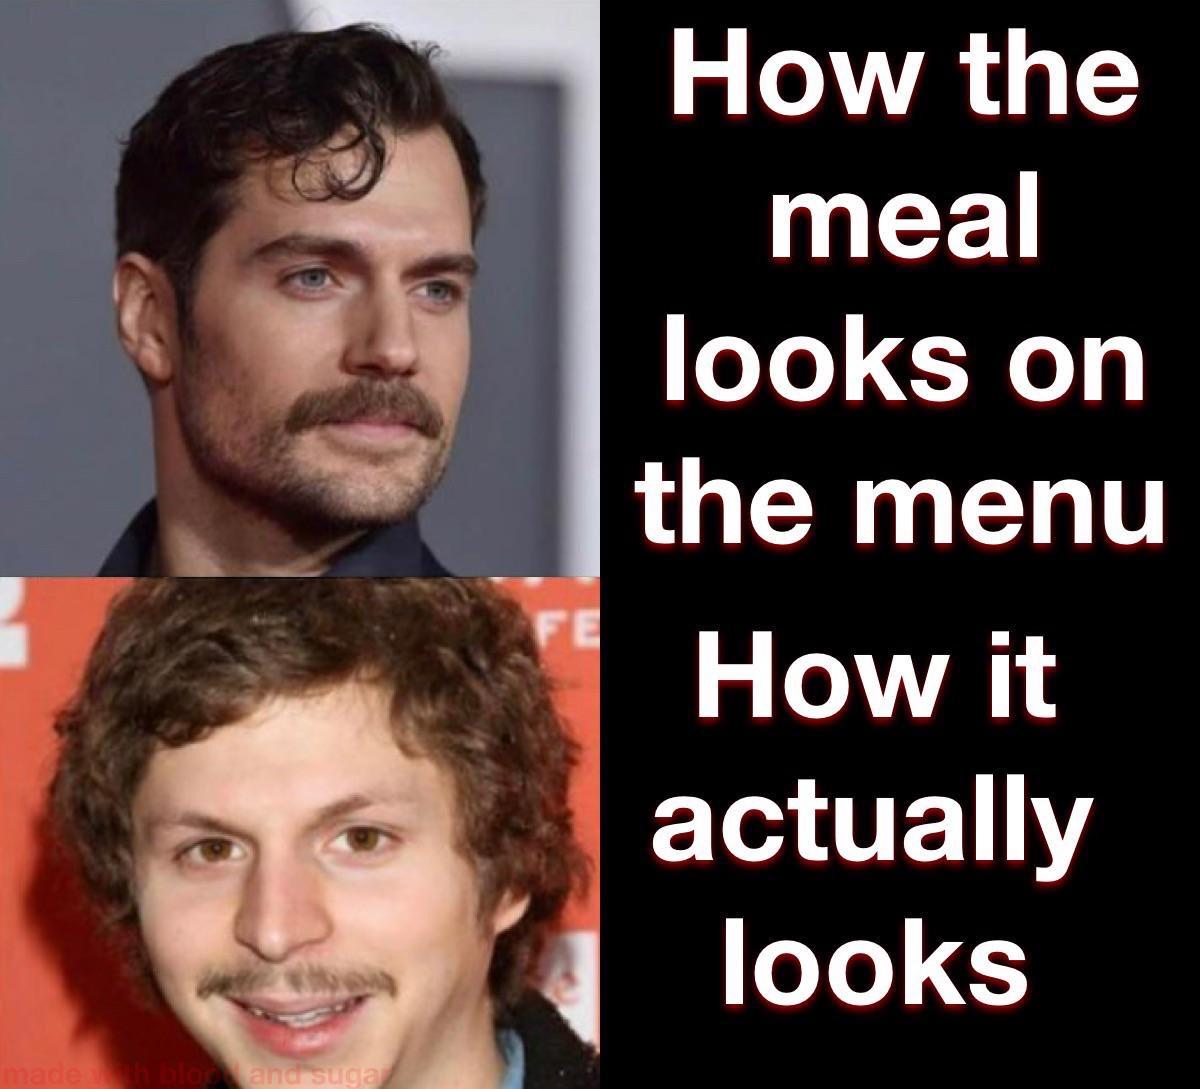 beard - How the meal looks on the menu Fe How it actually looks loana suga